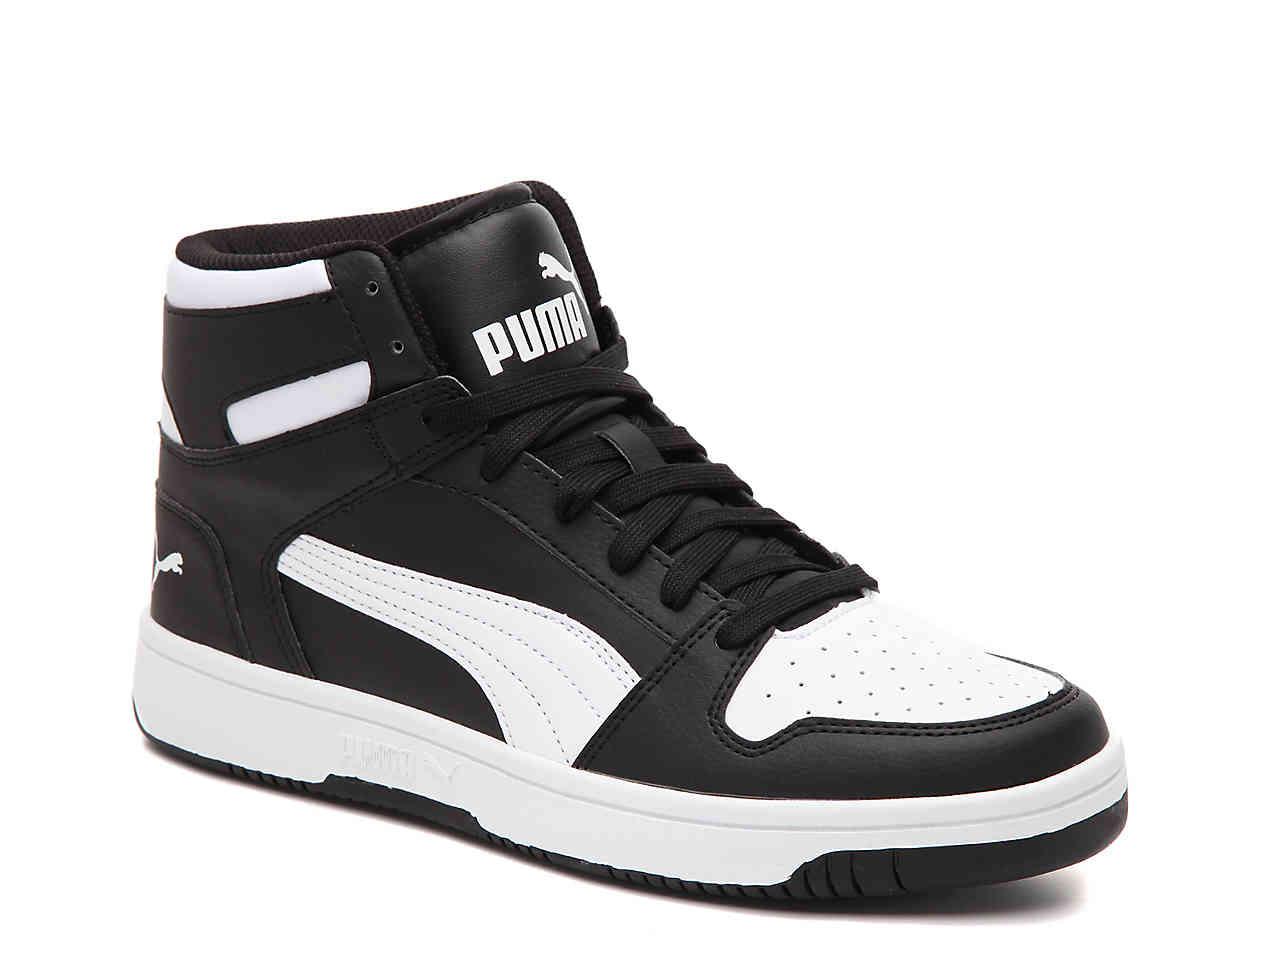 PUMA Rebound Layup Sneakers in Black/White (Black) for Men - Save ...